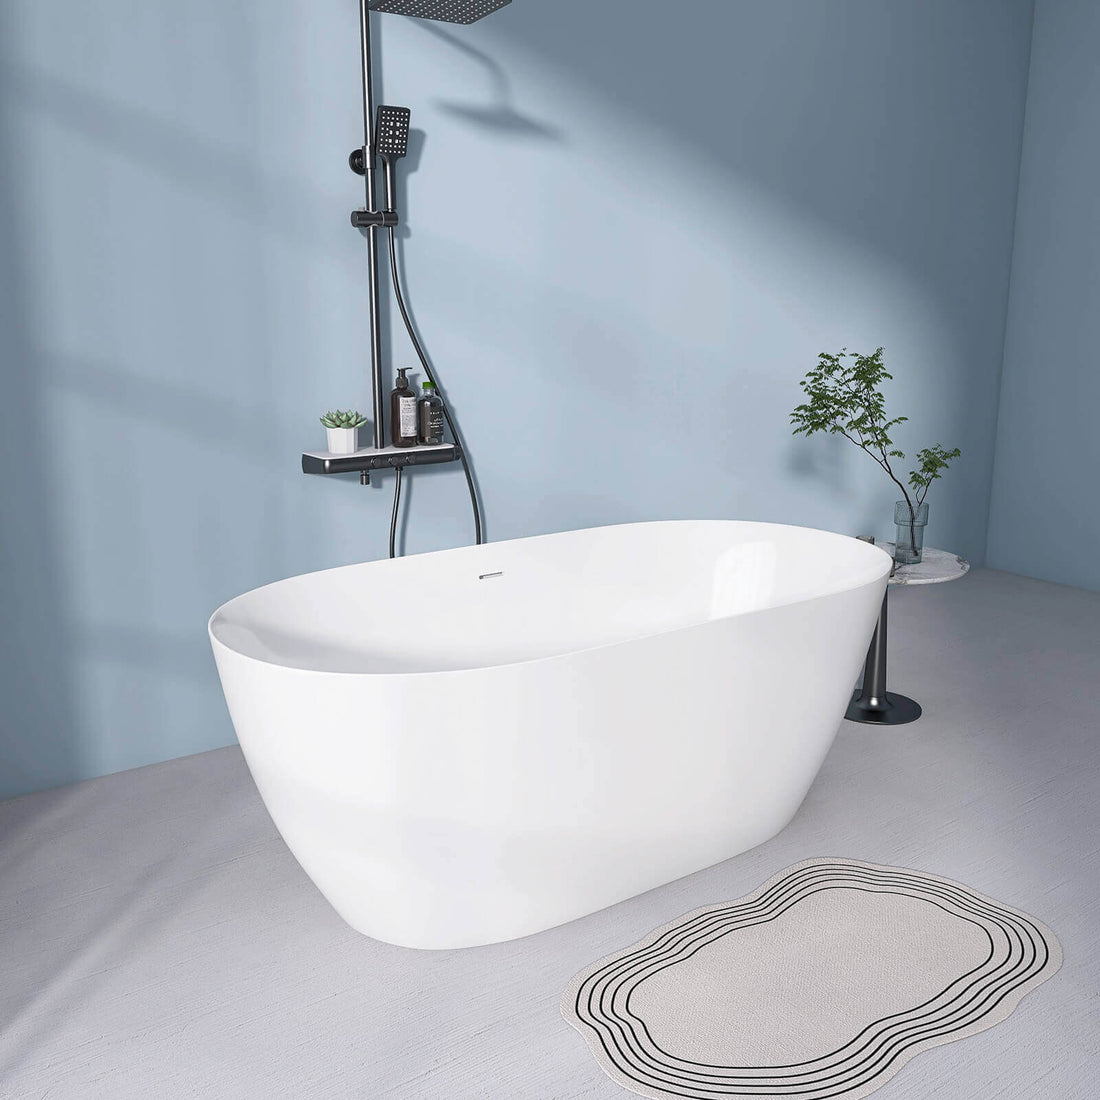 Modern Design 55 inch Adjustable Feet Acrylic Freestanding Soaking Tub